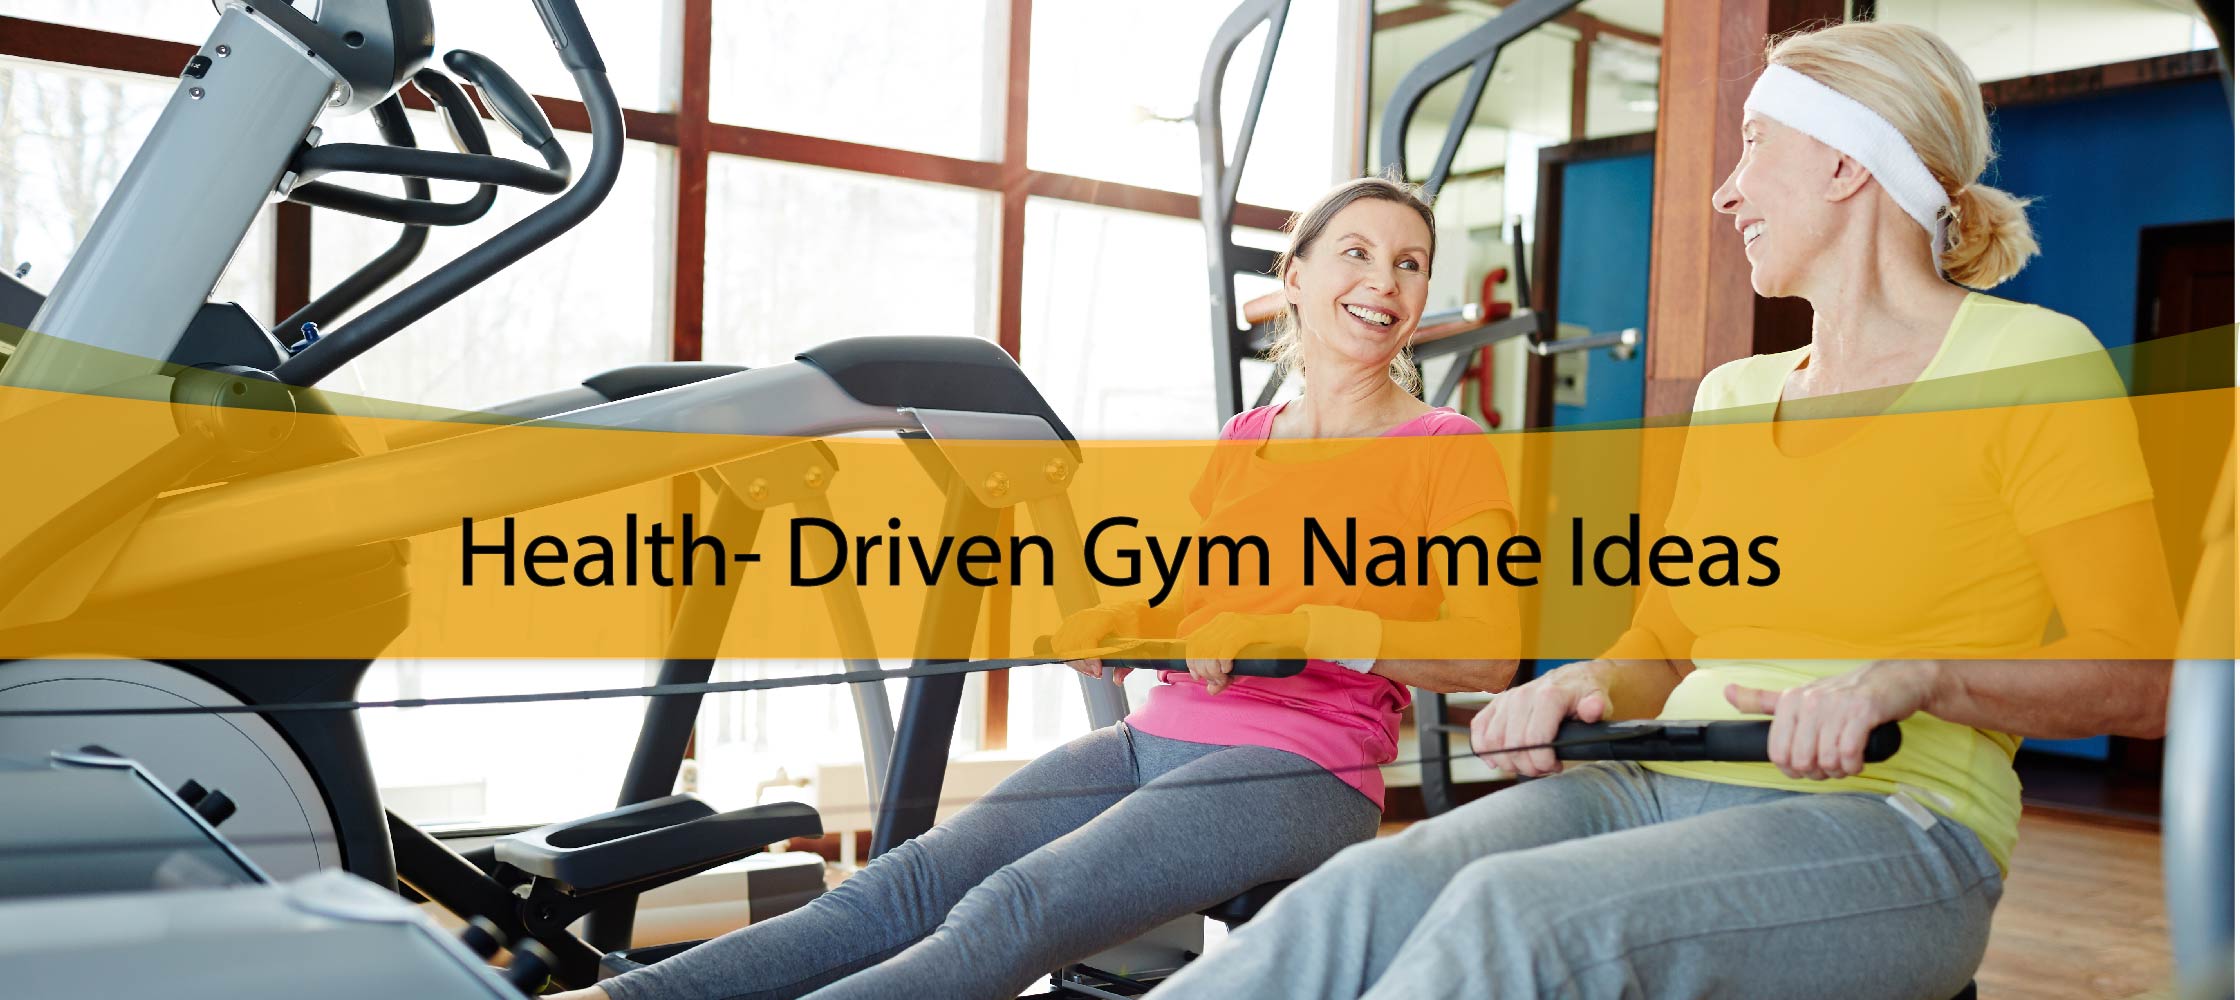 Health-Driven Gym Name Ideas